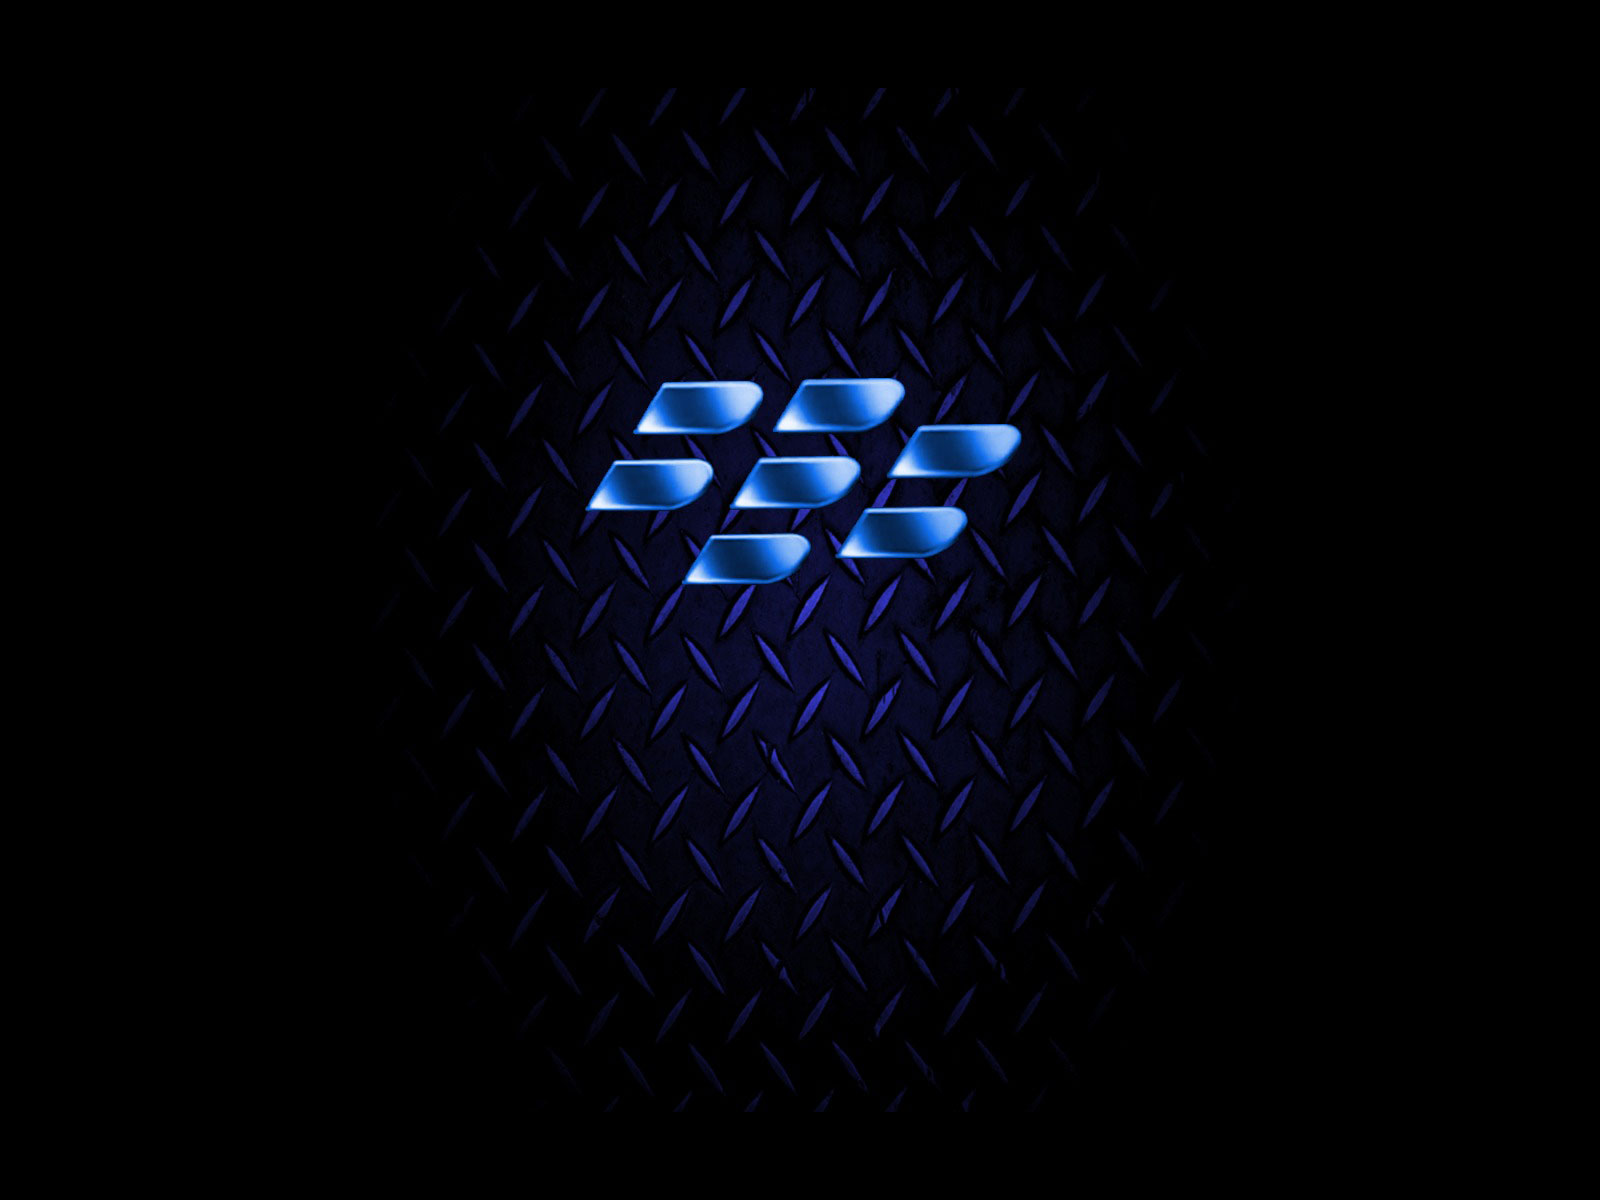 Hd Wallpapers Blackberry Logo 1024 X 1024 104 Kb Jpeg HD Wallpapers 1600x1200